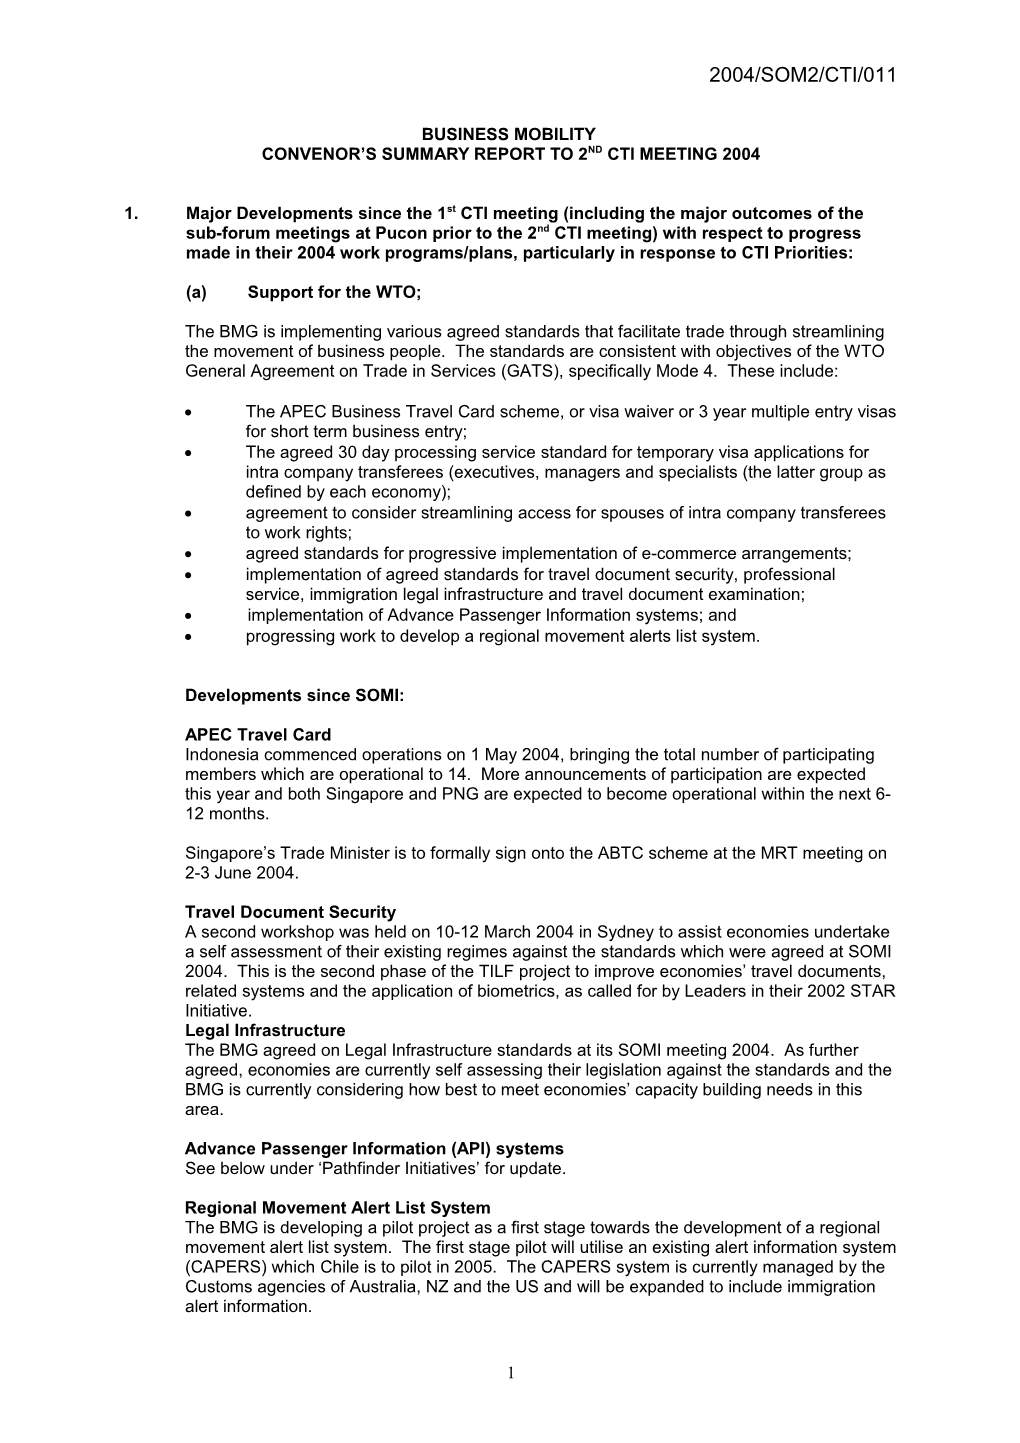 Convenor S Summary Report to 2Nd Cti Meeting 2004